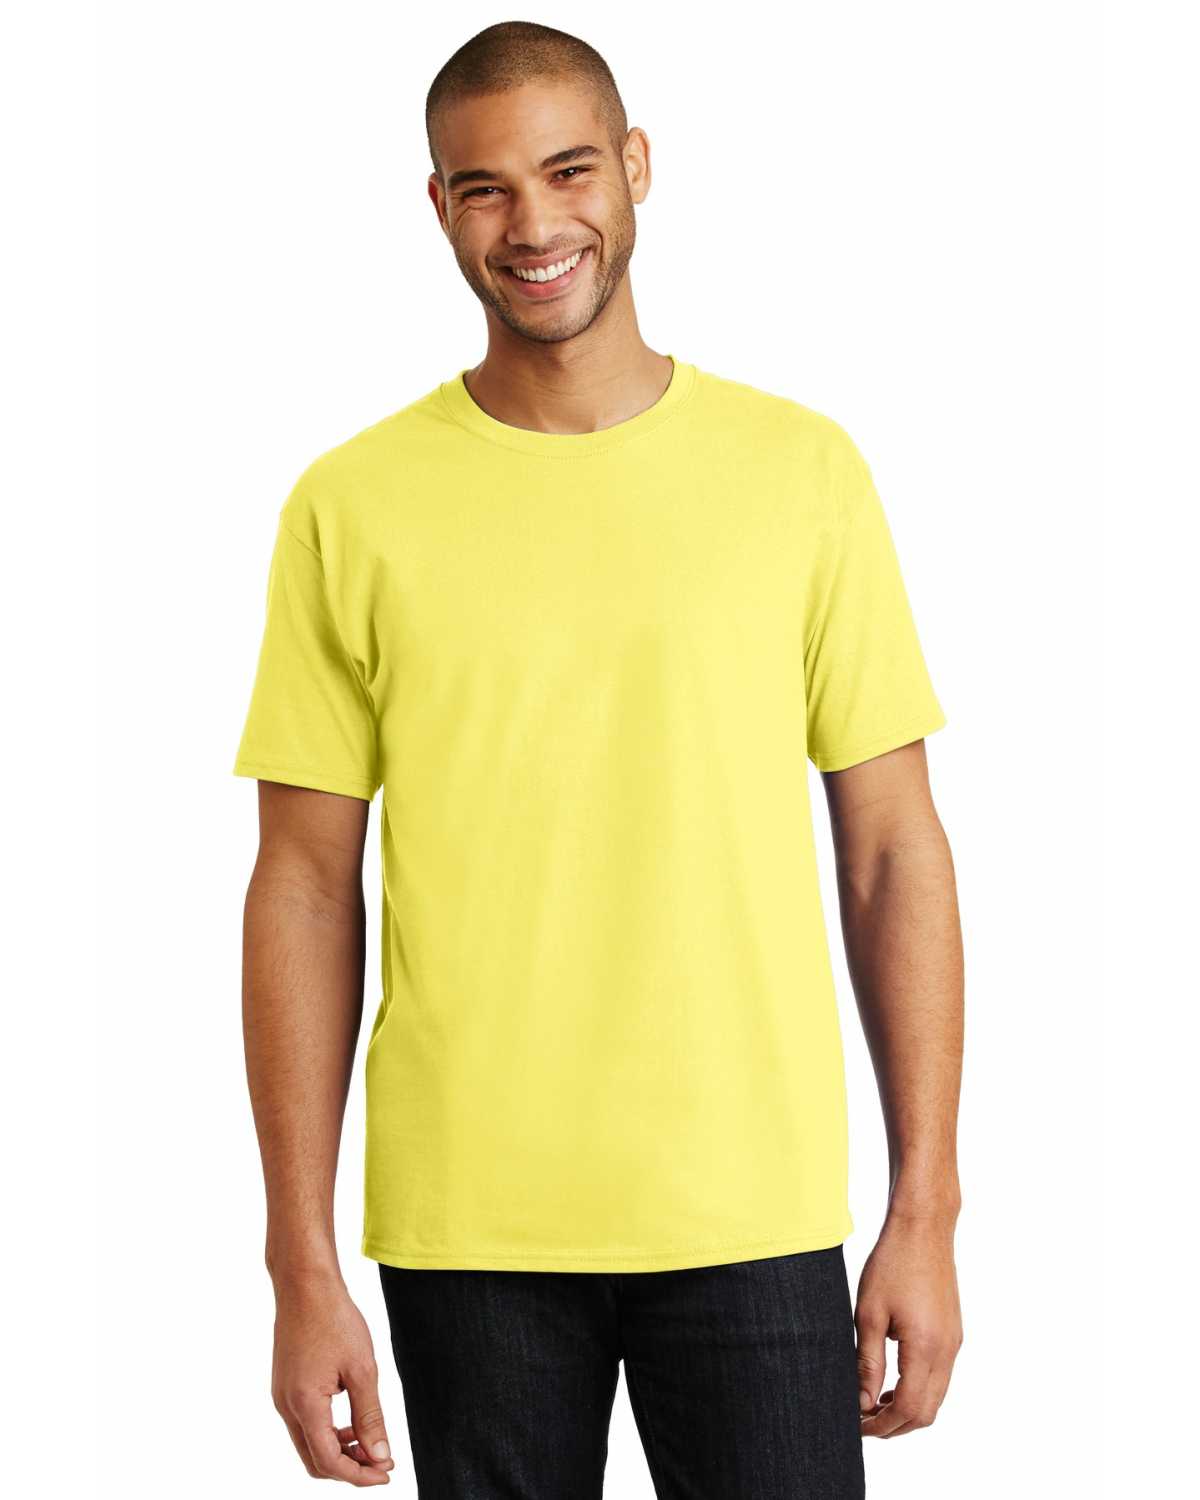 Hanes 5250 Tagless 100% Cotton T-Shirt on discount | ApparelChoice.com